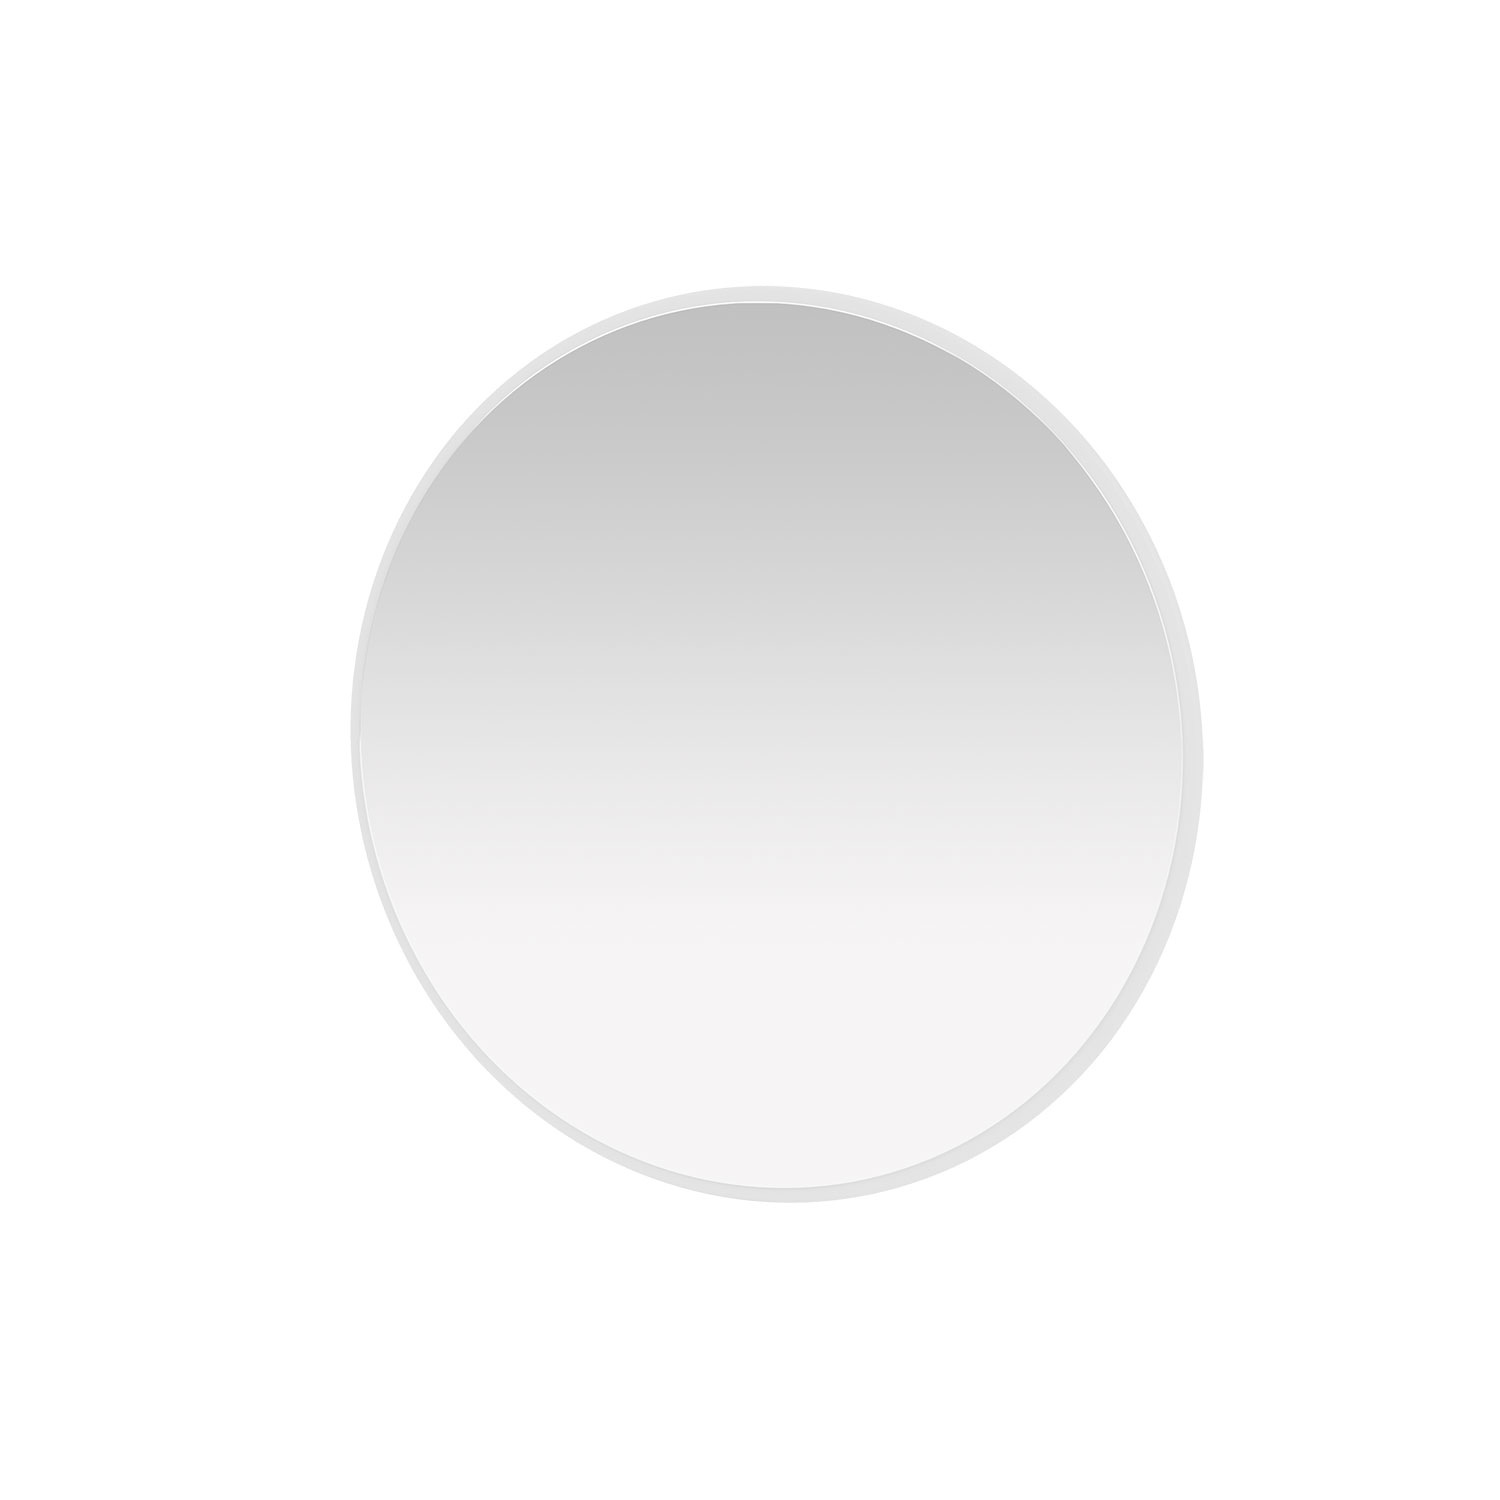 AROUND mirror, New White